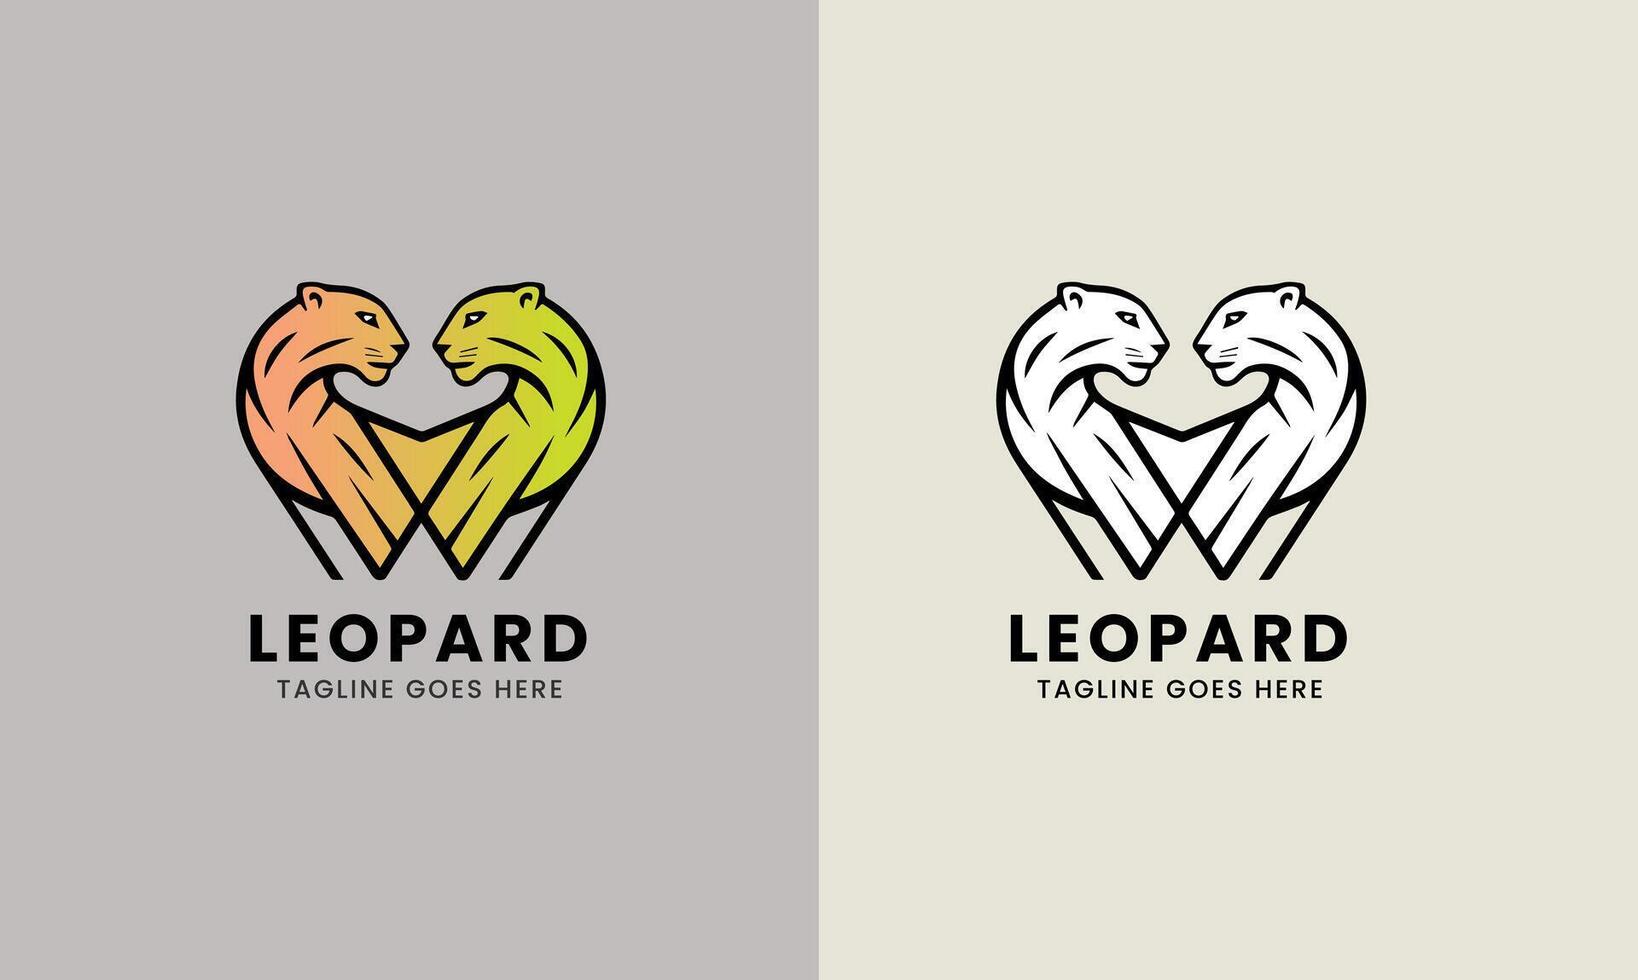 leopard ikon symbol puma, jaguar huvud, katt tiger djur- logotyp mall bild illustration vektor